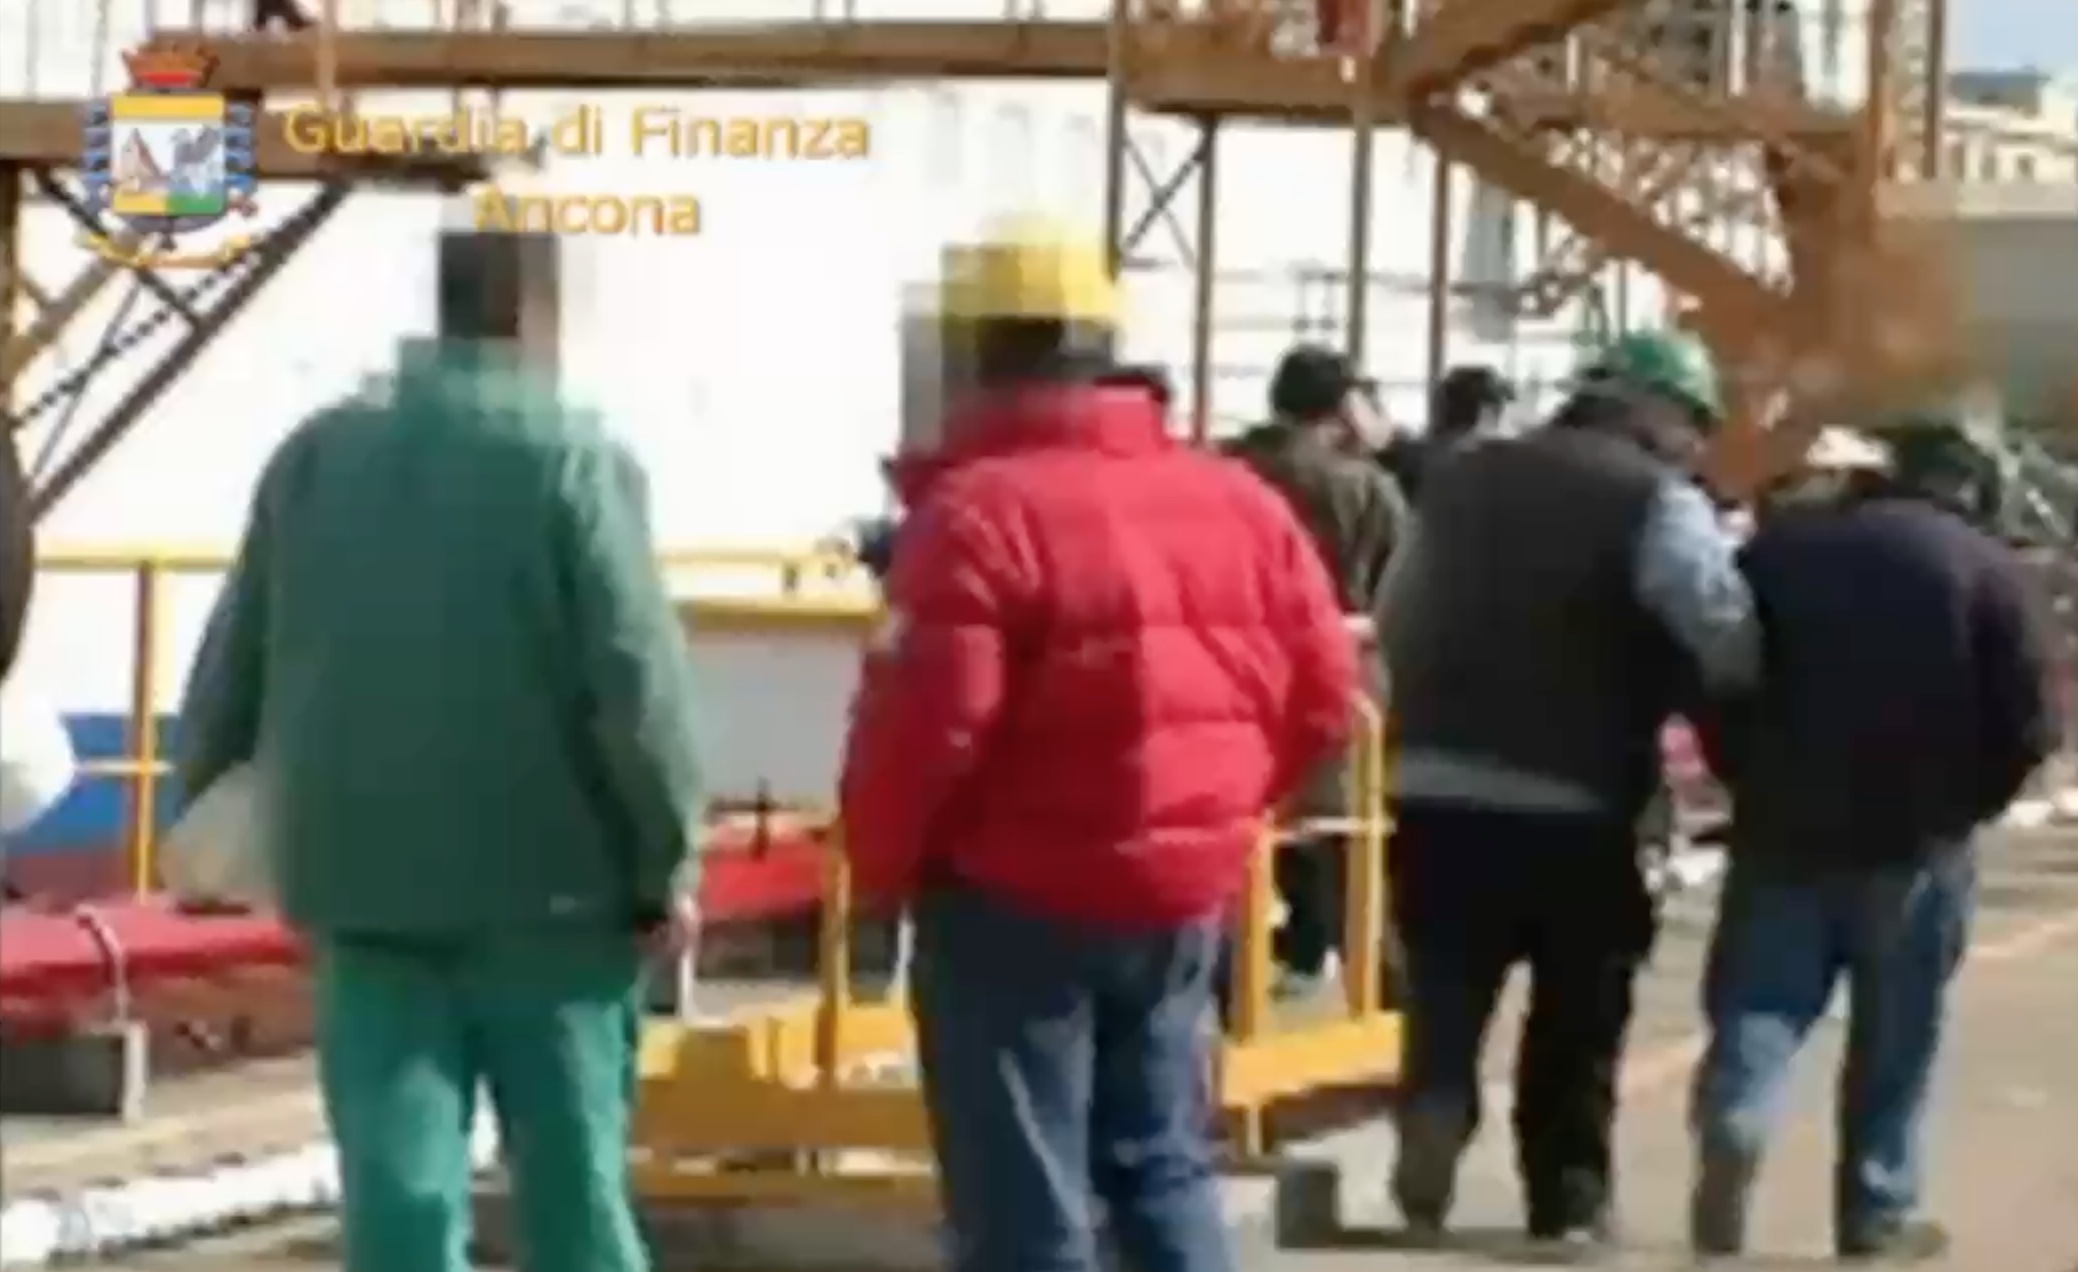 Maxi frode fiscale nella cantieristica navale: false fatture per 131 milioni di euro